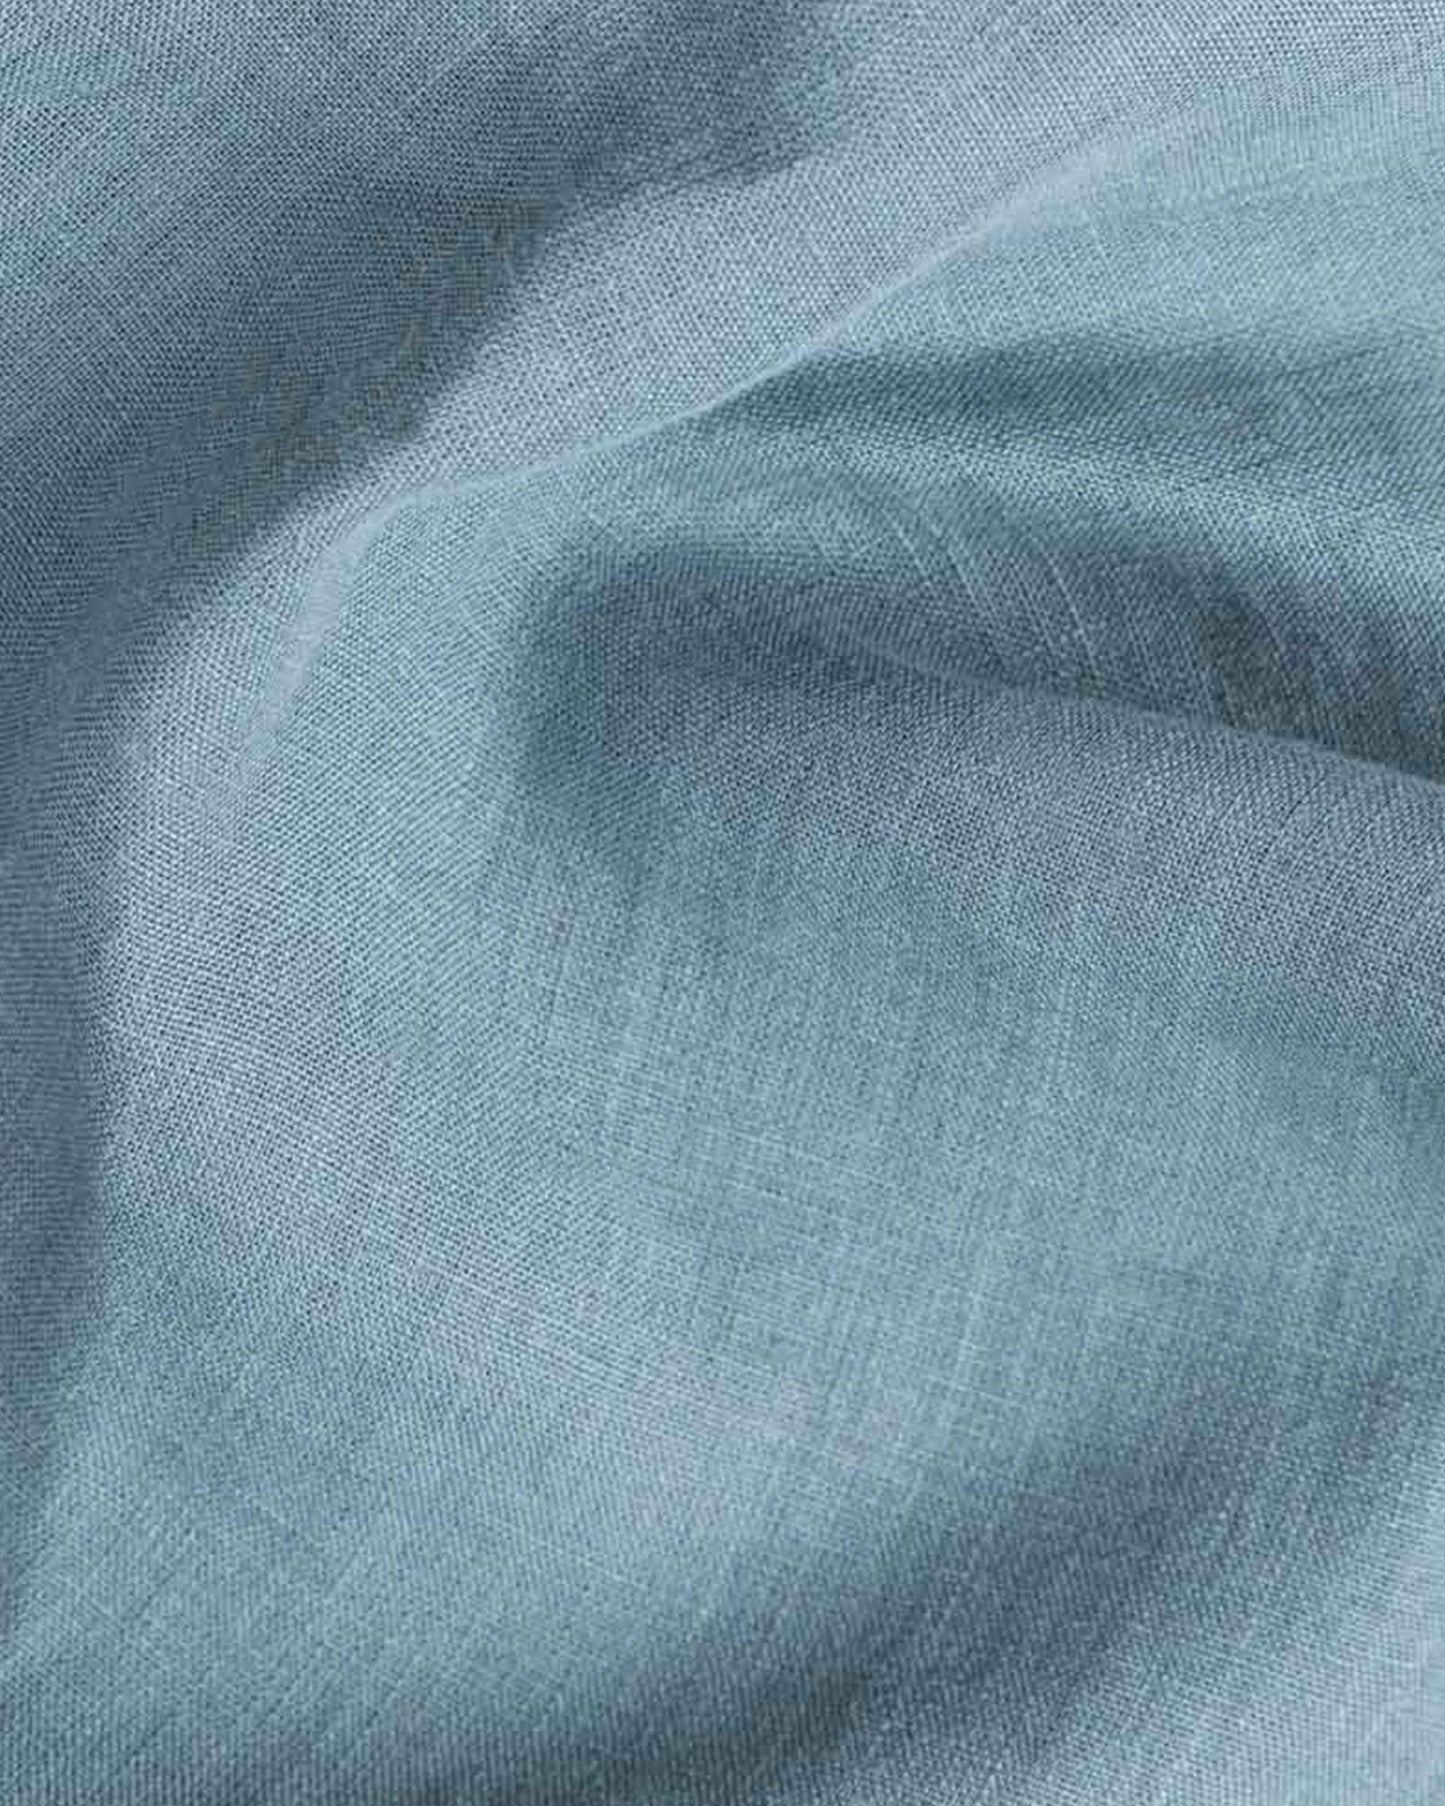 Gray blue linen duvet cover set (3 pcs) - MagicLinen